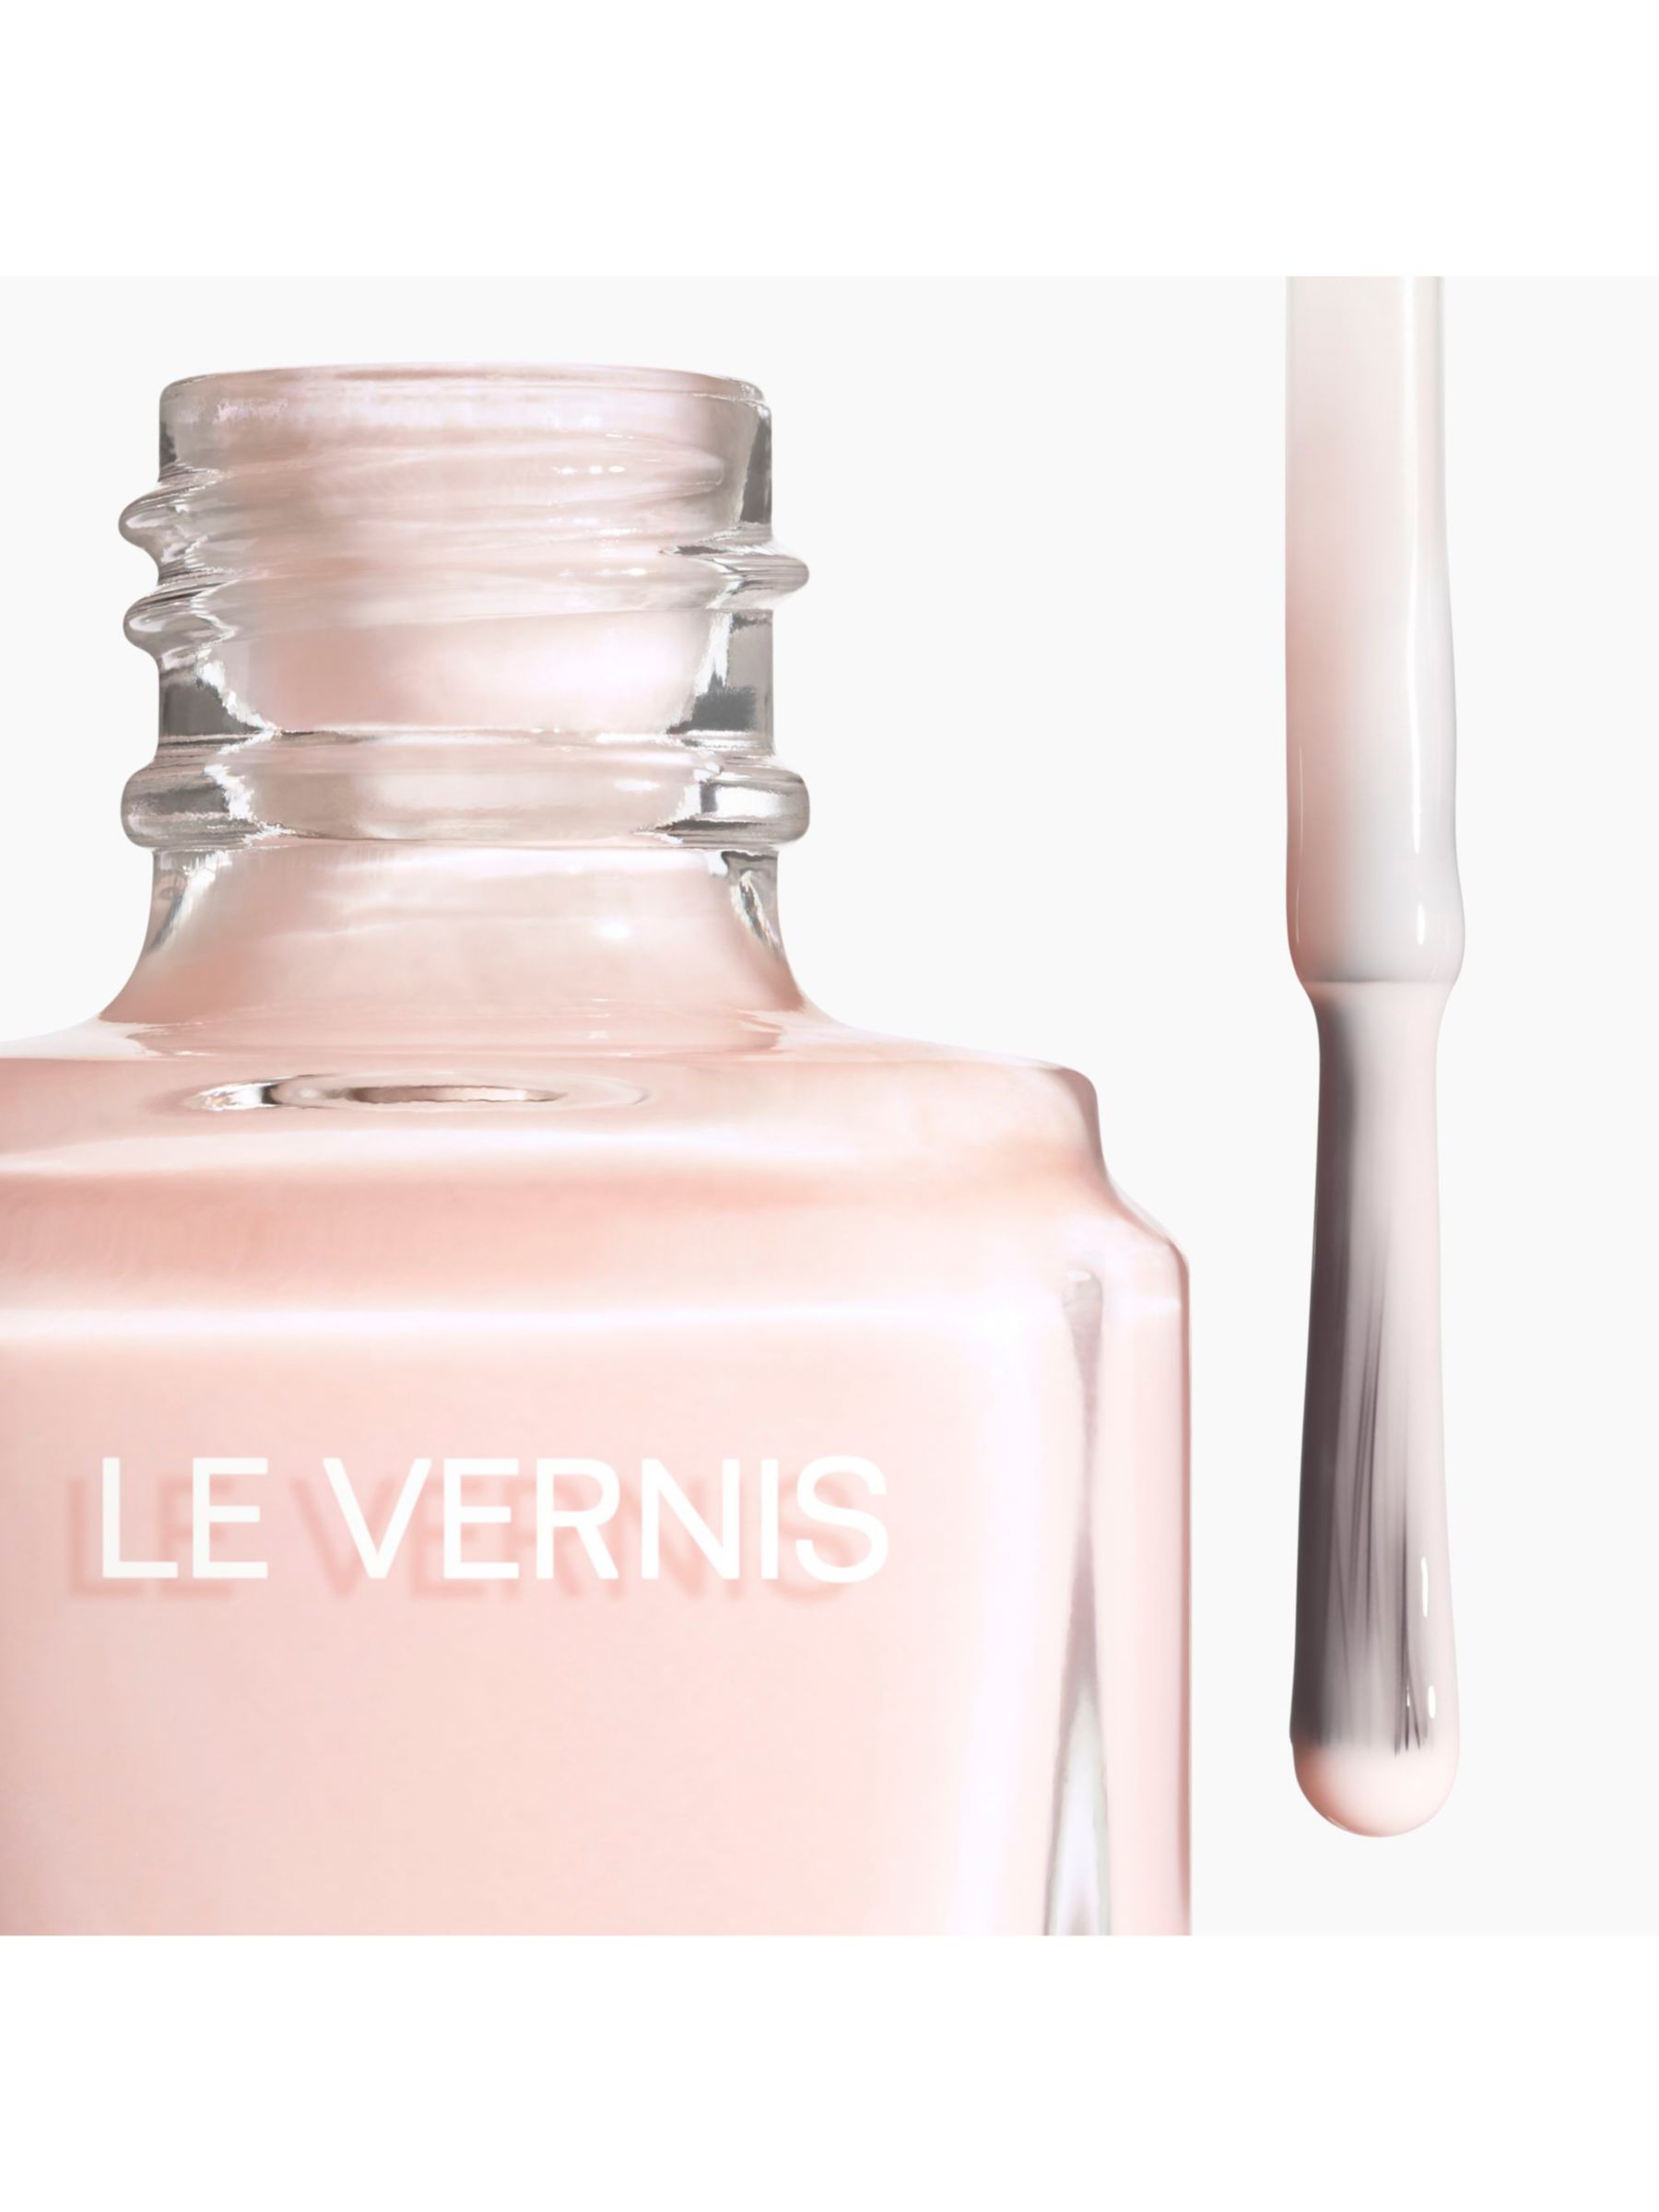 CHANEL Le Vernis Nail Colour, 111 Ballerina at John Lewis & Partners